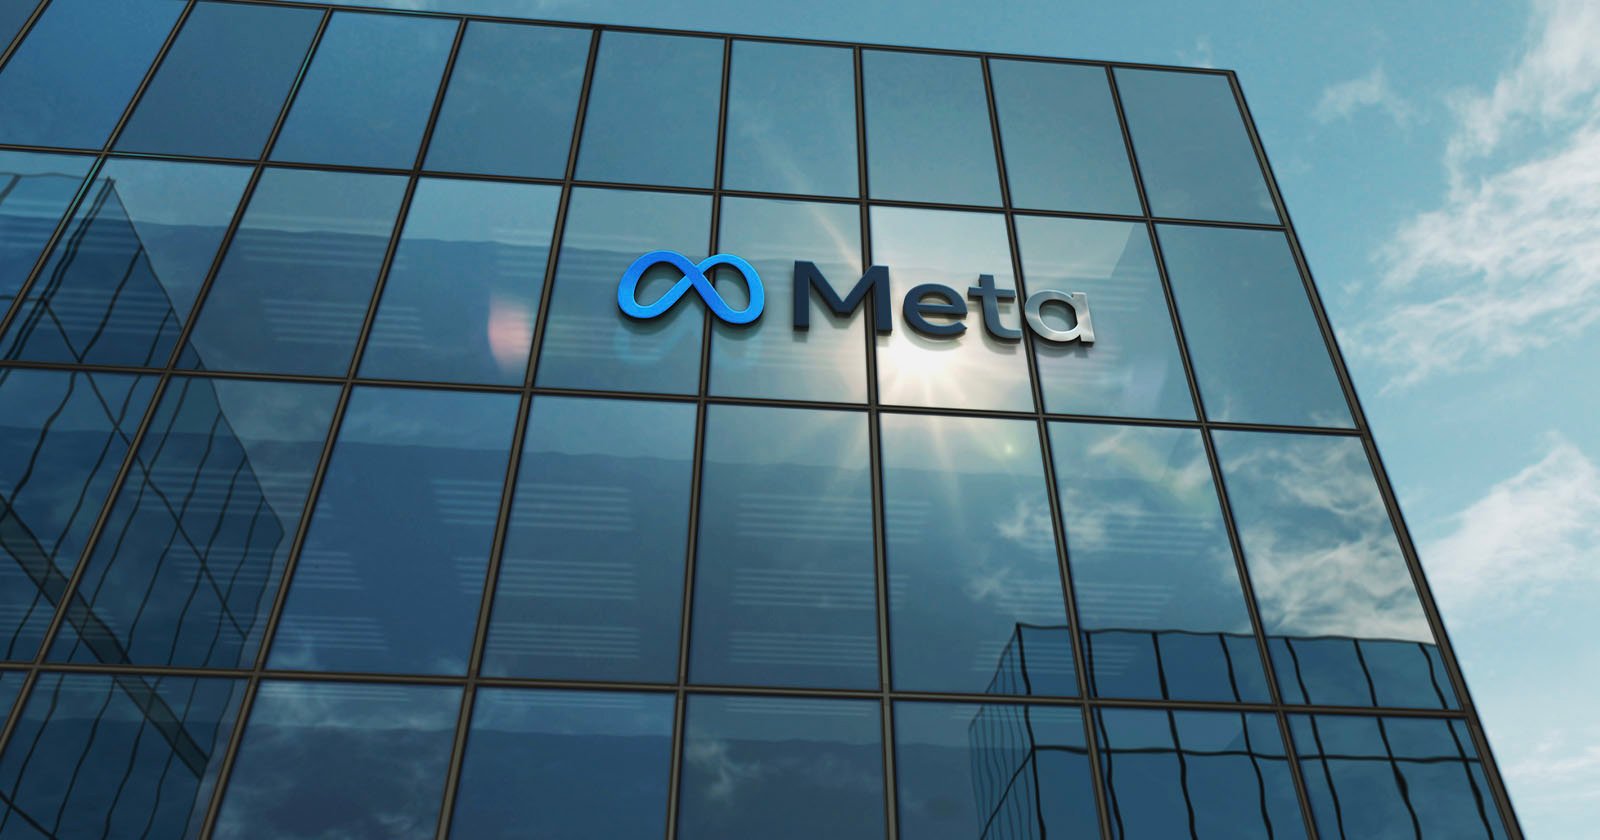  meta expanding its child protection efforts response whistleblower 